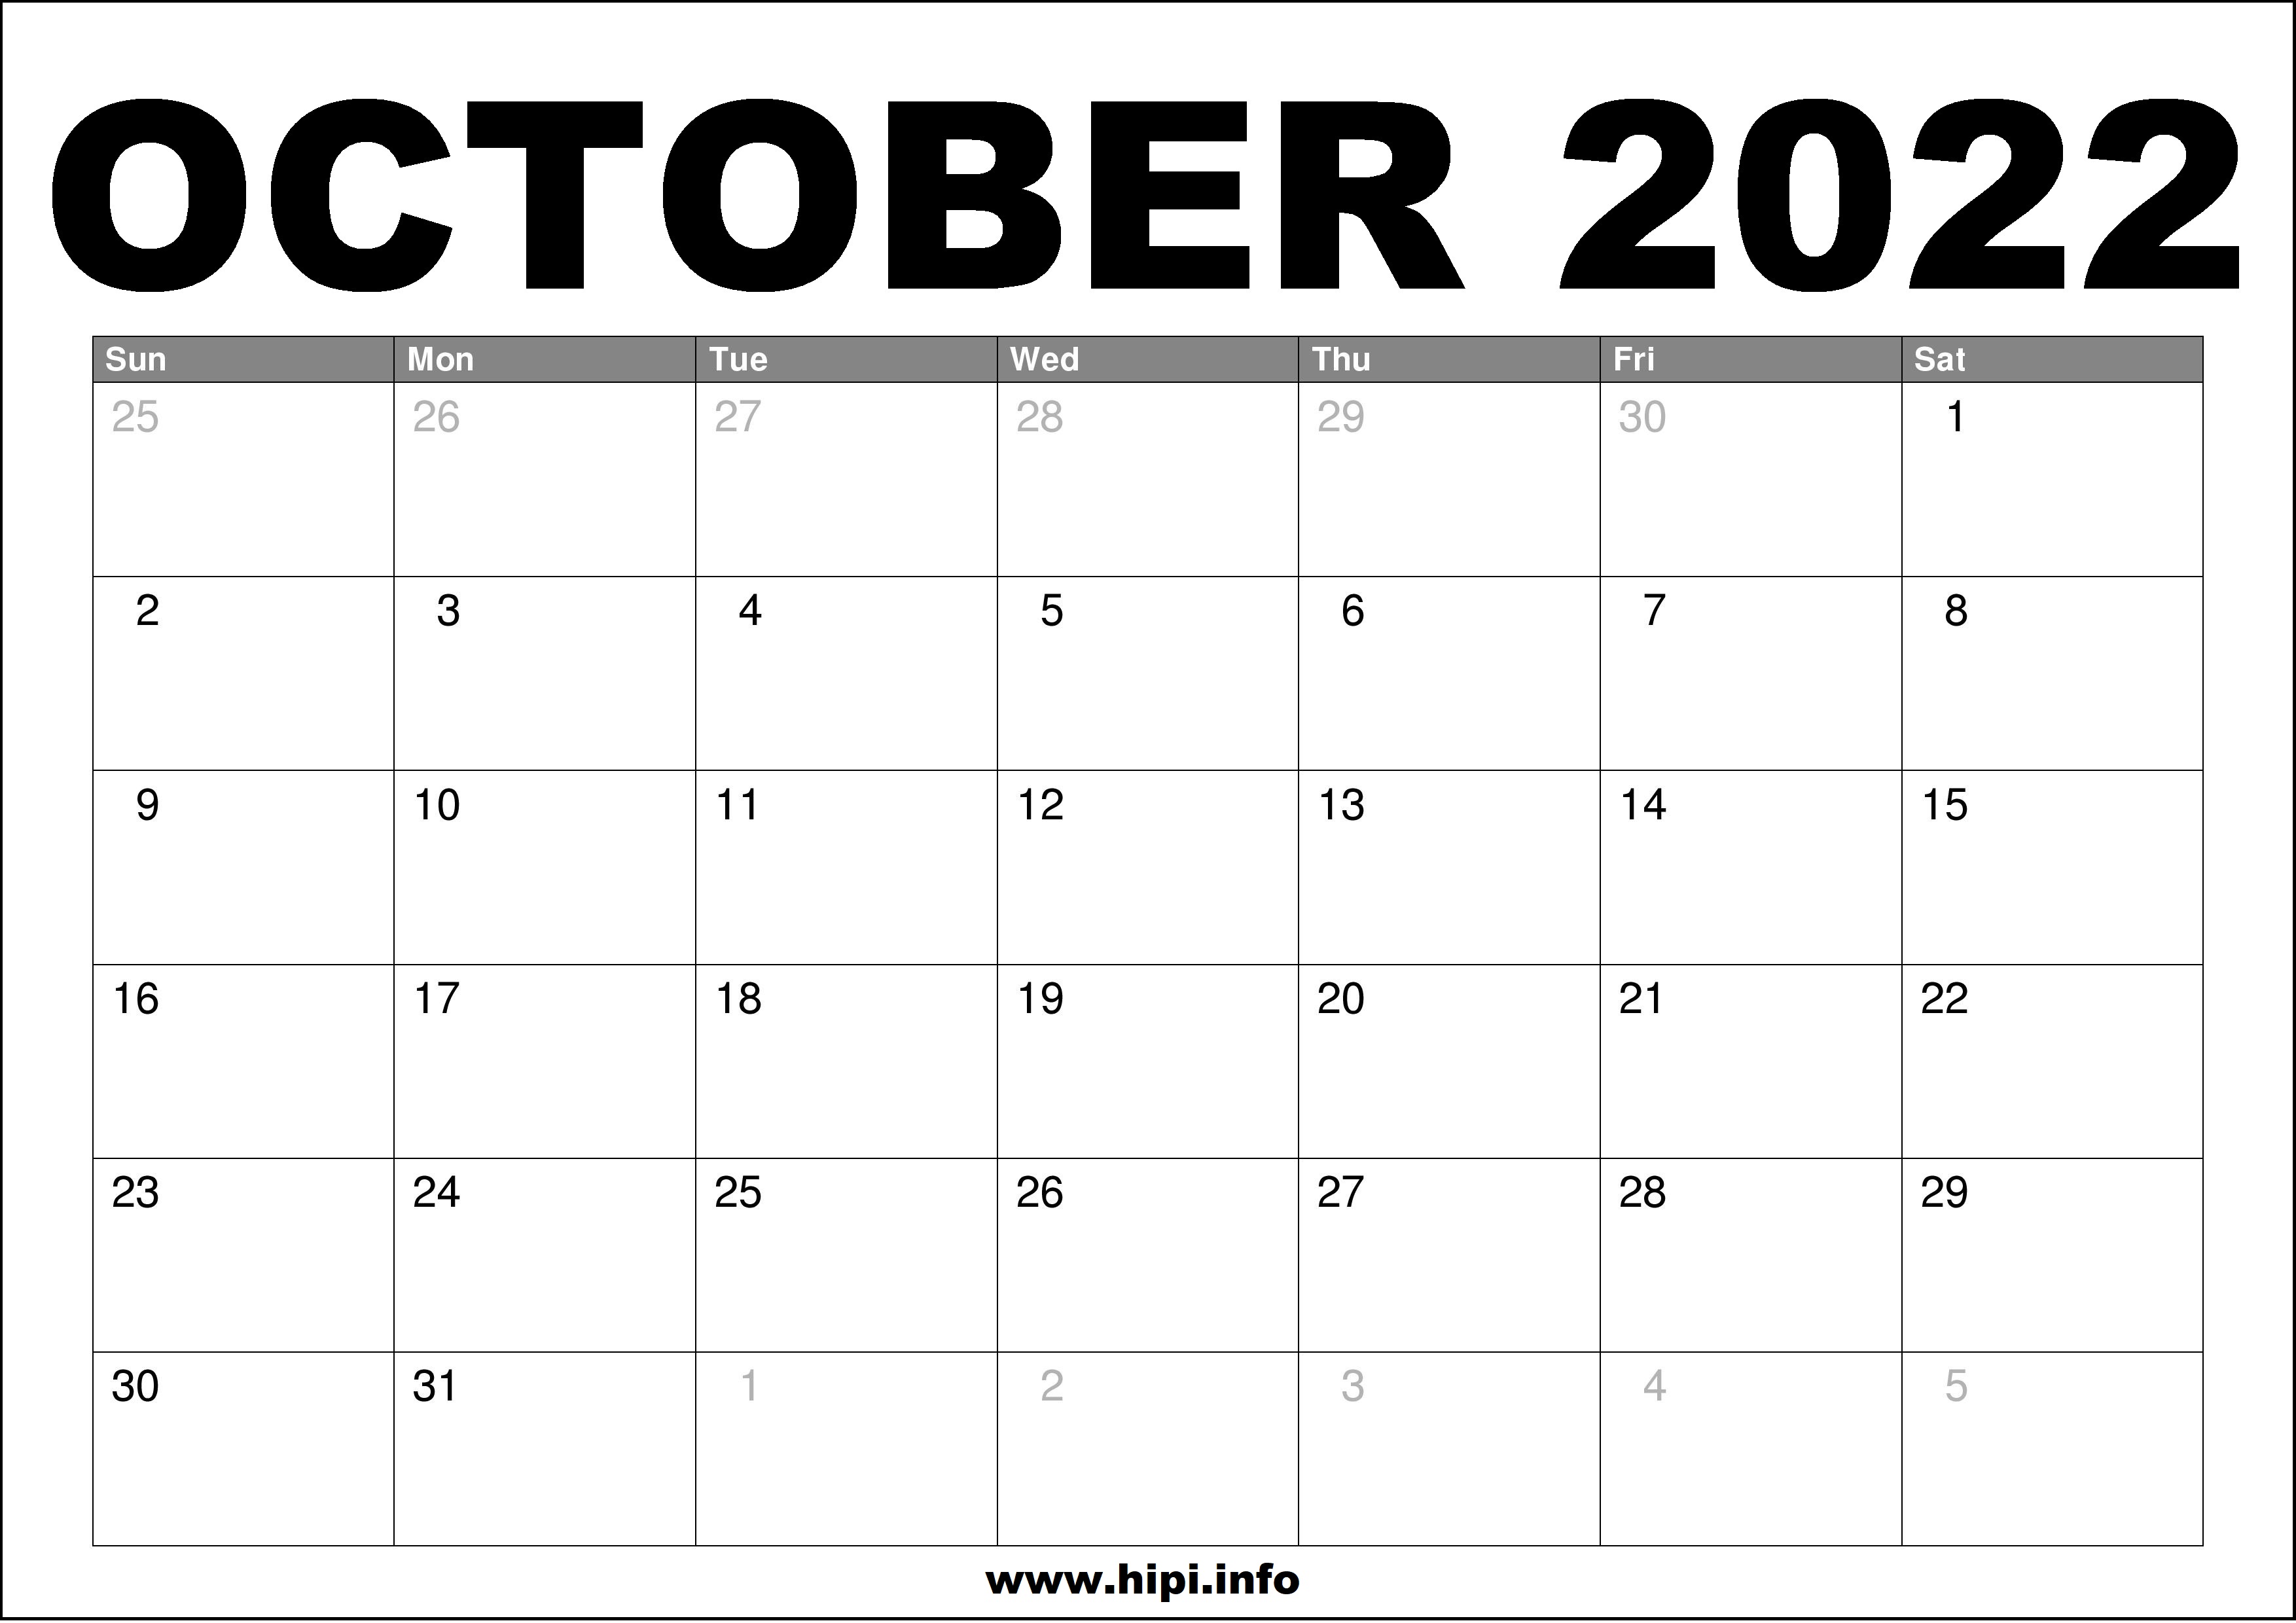 Oct Calendar 2022 Printable October 2022 Calendar Printable Free - Hipi.info | Calendars Printable Free